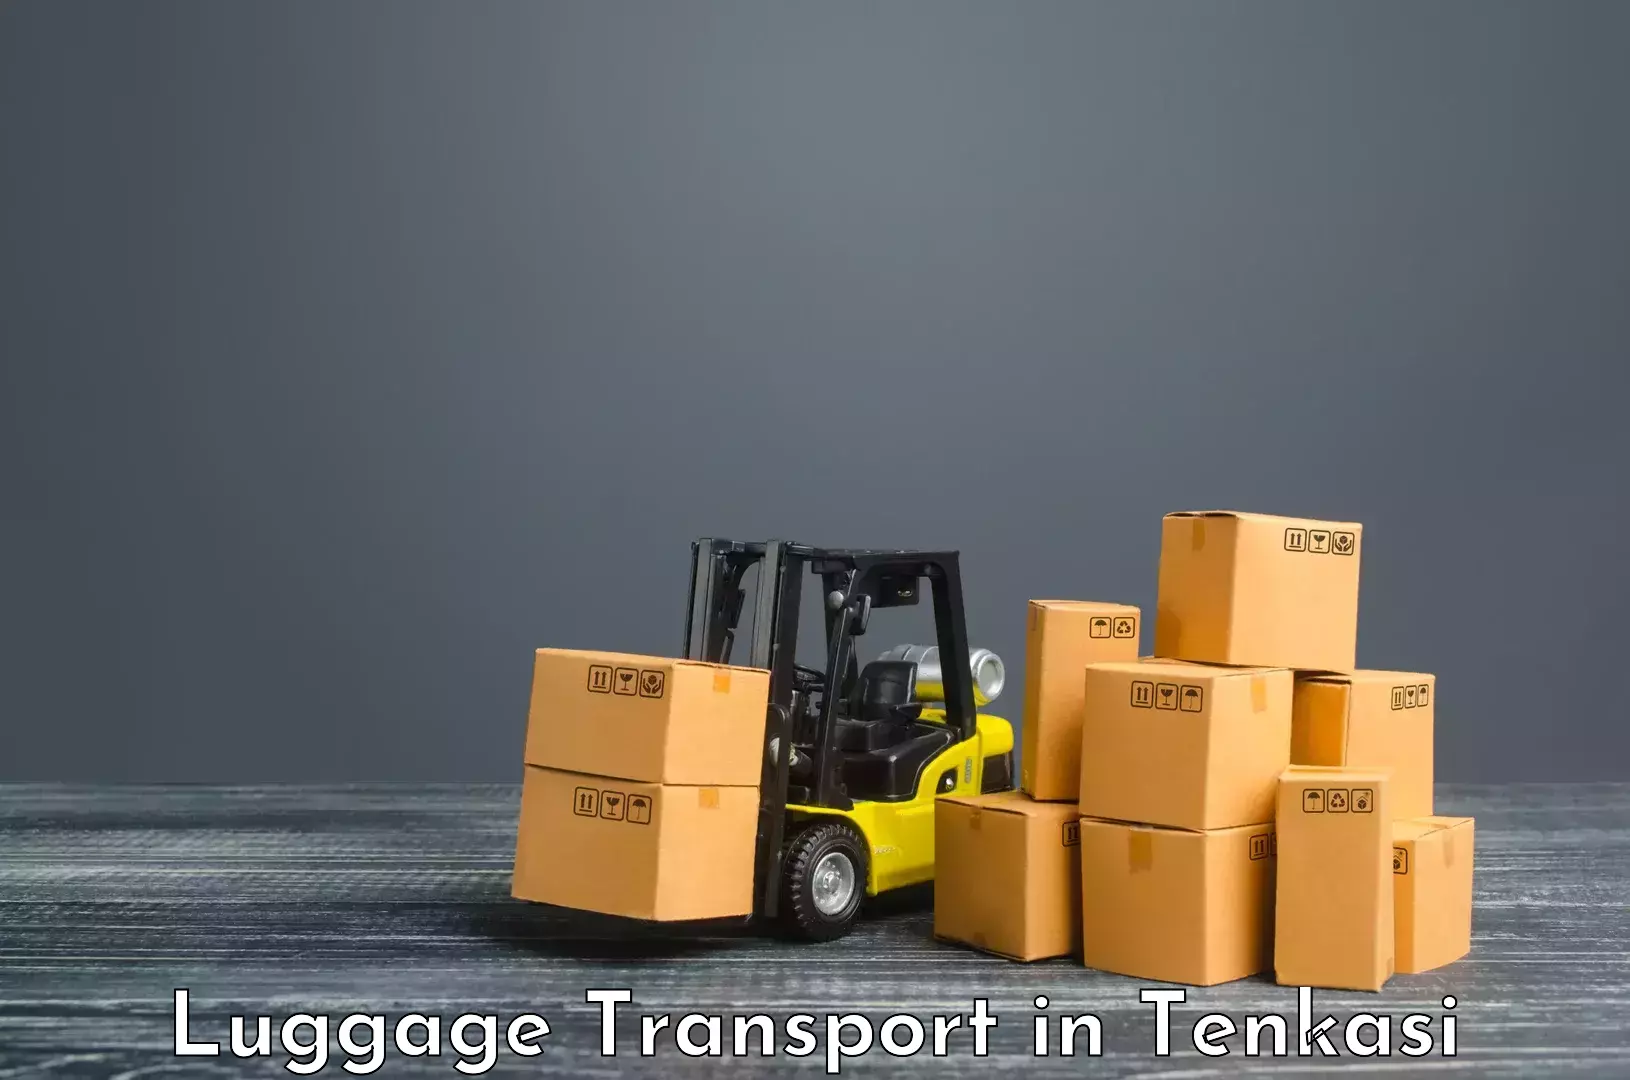 Luggage transport schedule in Tenkasi